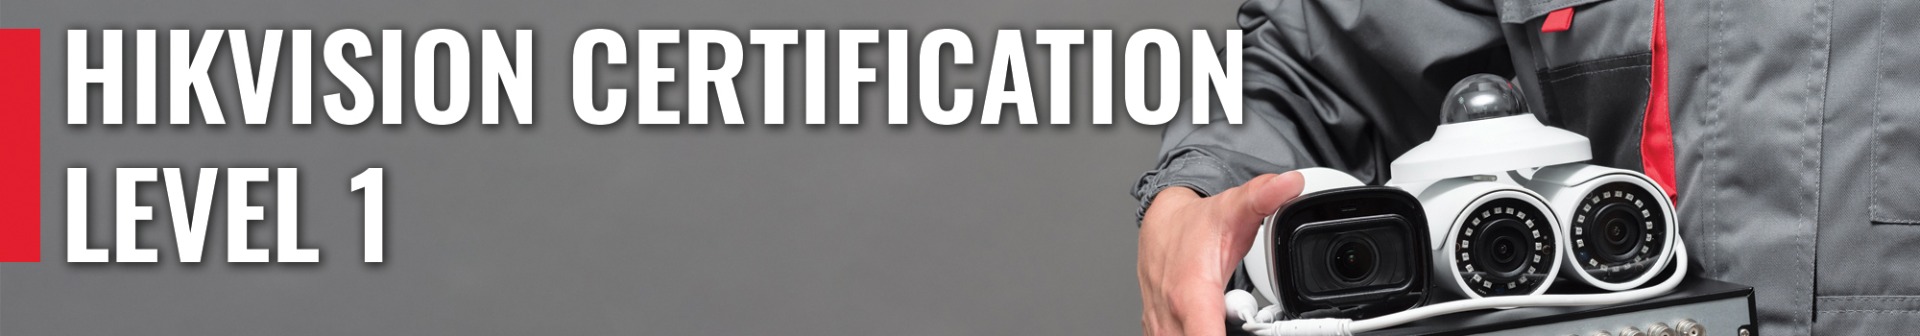 certification-level-1-banner